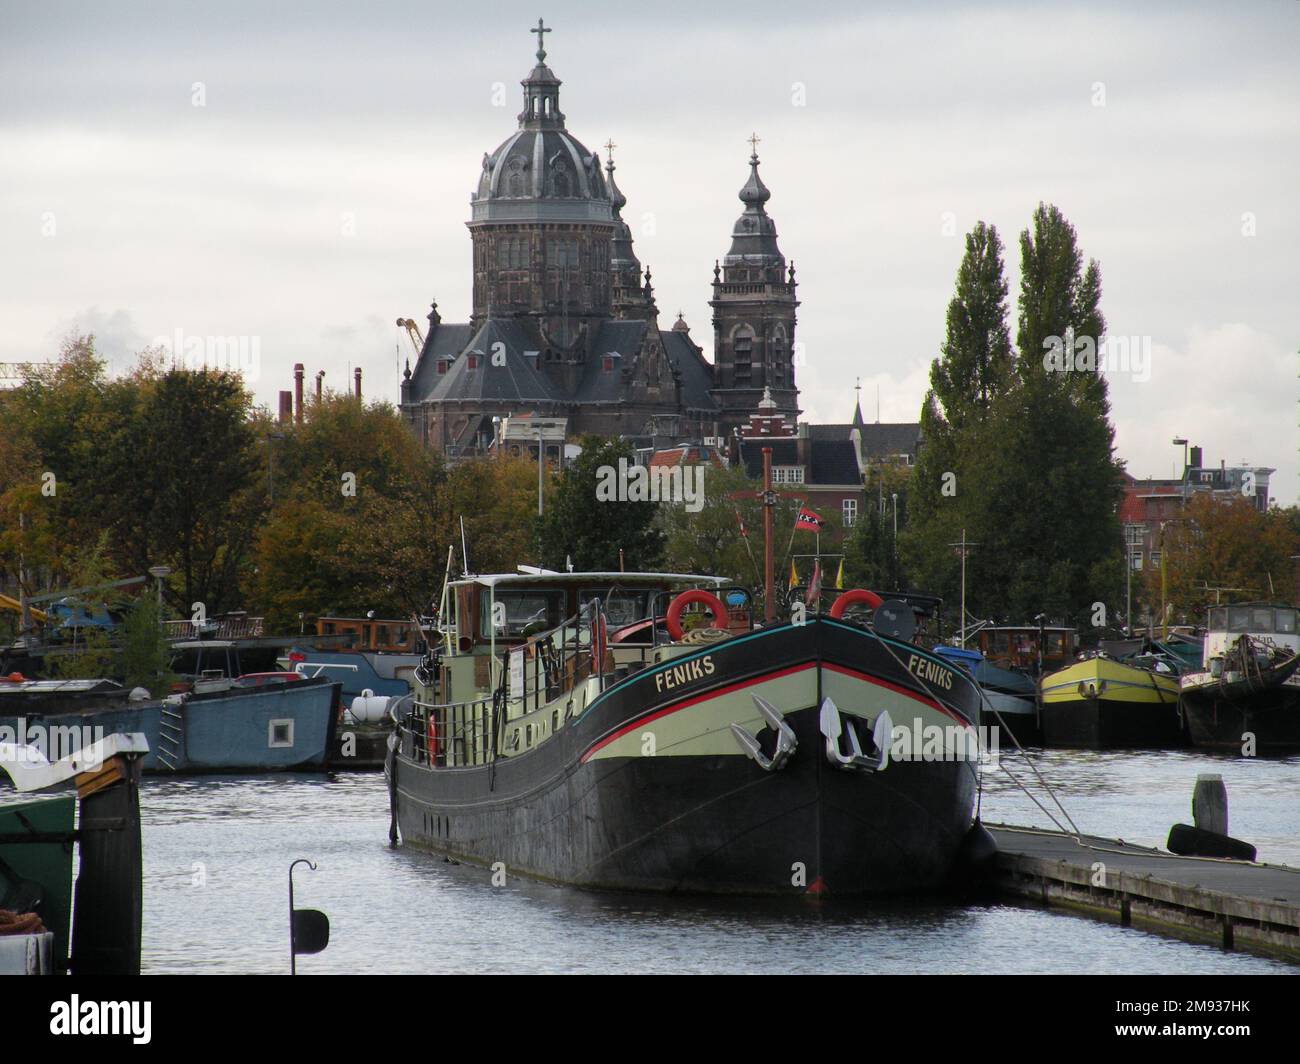 Amsterdam, Netherland, Europe Stock Photo